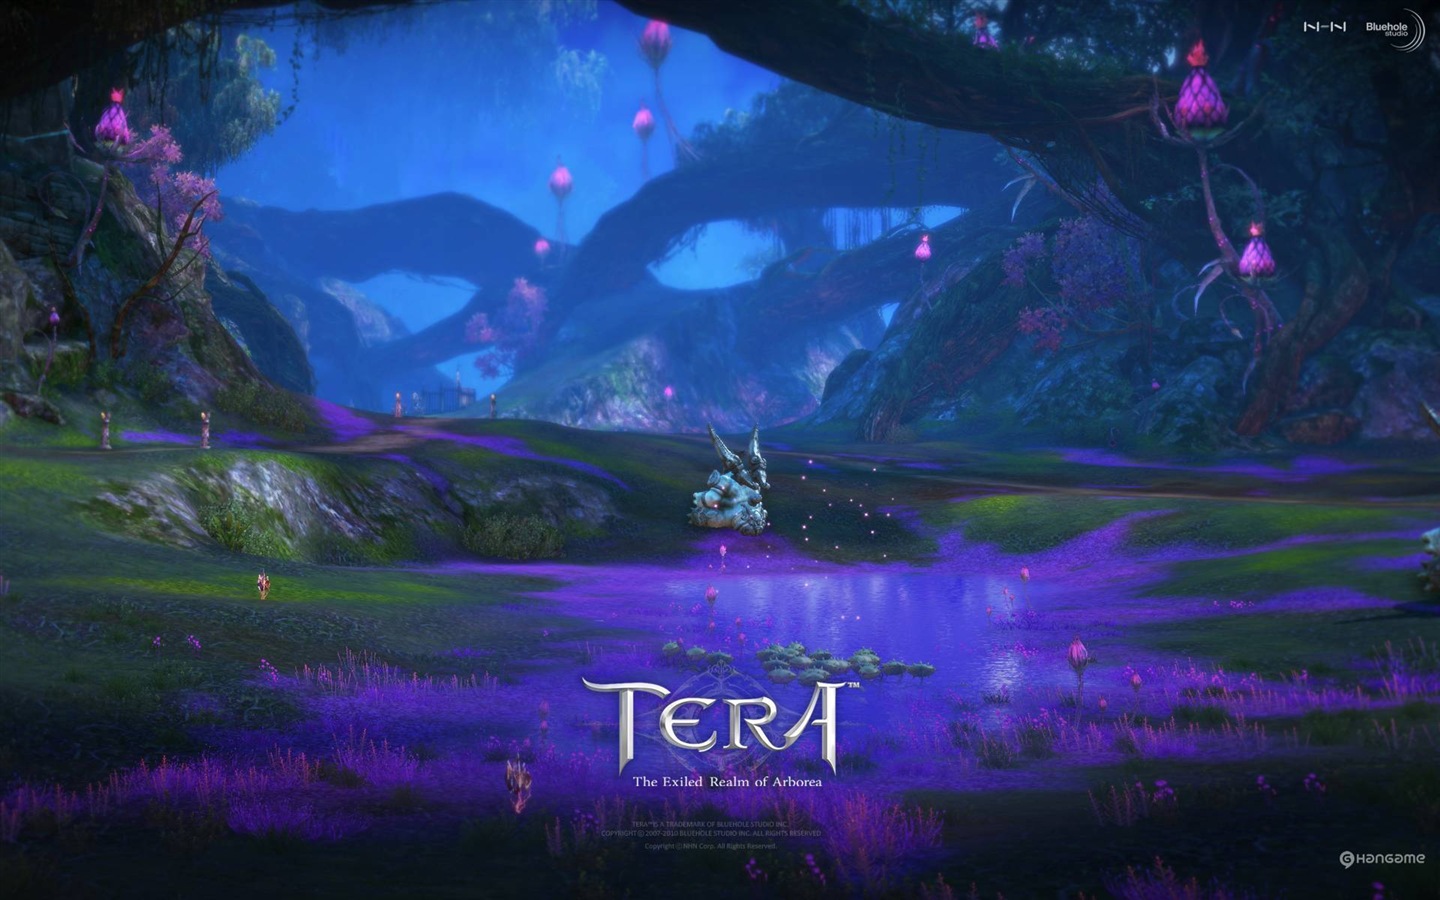 Tera HD game wallpapers #8 - 1440x900